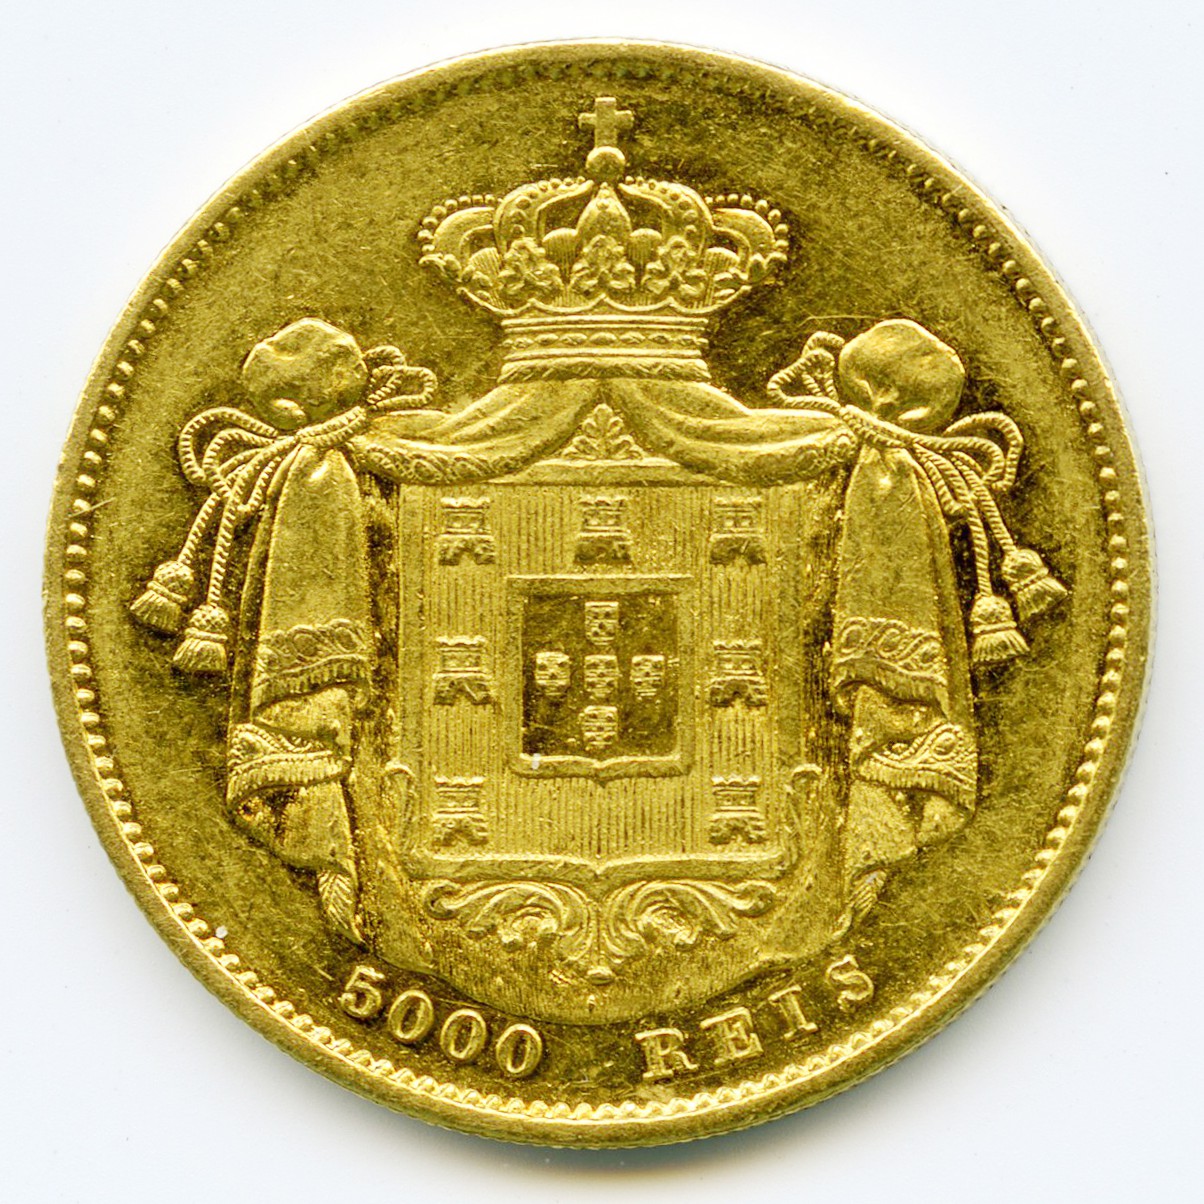 Portugal - 5 000 Reis - 1860 revers